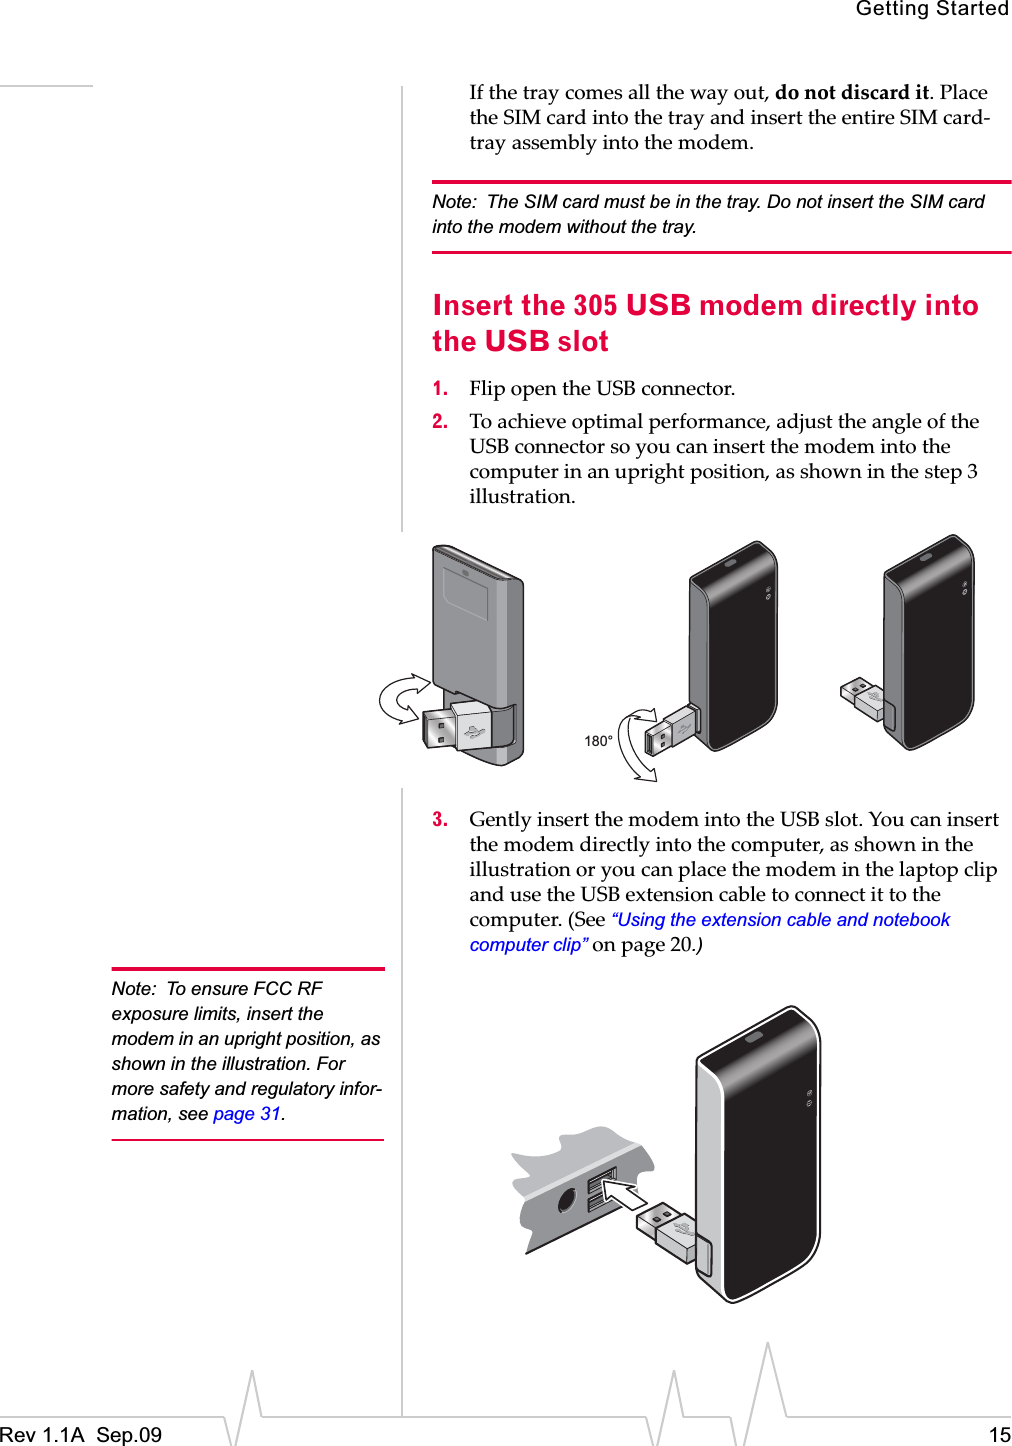 Getting StartedRev 1.1A  Sep.09 15Ifȱtheȱtrayȱcomesȱallȱtheȱwayȱout,ȱdoȱnotȱdiscardȱit.ȱPlaceȱtheȱSIMȱcardȱintoȱtheȱtrayȱandȱinsertȱtheȱentireȱSIMȱcardȬtrayȱassemblyȱintoȱtheȱmodem.ȱNote: The SIM card must be in the tray. Do not insert the SIM card into the modem without the tray.Insert the 305 USB modem directly into the USB slot1. FlipȱopenȱtheȱUSBȱconnector.2. Toȱachieveȱoptimalȱperformance,ȱadjustȱtheȱangleȱofȱtheȱUSBȱconnectorȱsoȱyouȱcanȱinsertȱtheȱmodemȱintoȱtheȱcomputerȱinȱanȱuprightȱposition,ȱasȱshownȱinȱtheȱstepȱ3ȱillustration.3. GentlyȱinsertȱtheȱmodemȱintoȱtheȱUSBȱslot.ȱYouȱcanȱinsertȱtheȱmodemȱdirectlyȱintoȱtheȱcomputer,ȱasȱshownȱinȱtheȱillustrationȱorȱyouȱcanȱplaceȱtheȱmodemȱinȱtheȱlaptopȱclipȱandȱuseȱtheȱUSBȱextensionȱcableȱtoȱconnectȱitȱtoȱtheȱcomputer.ȱ(Seeȱ“Using the extension cable and notebook computer clip”ȱonȱpage 20.)Note: To ensure FCC RF exposure limits, insert the modem in an upright position, as shown in the illustration. For more safety and regulatory infor-mation, see page 31.180° 